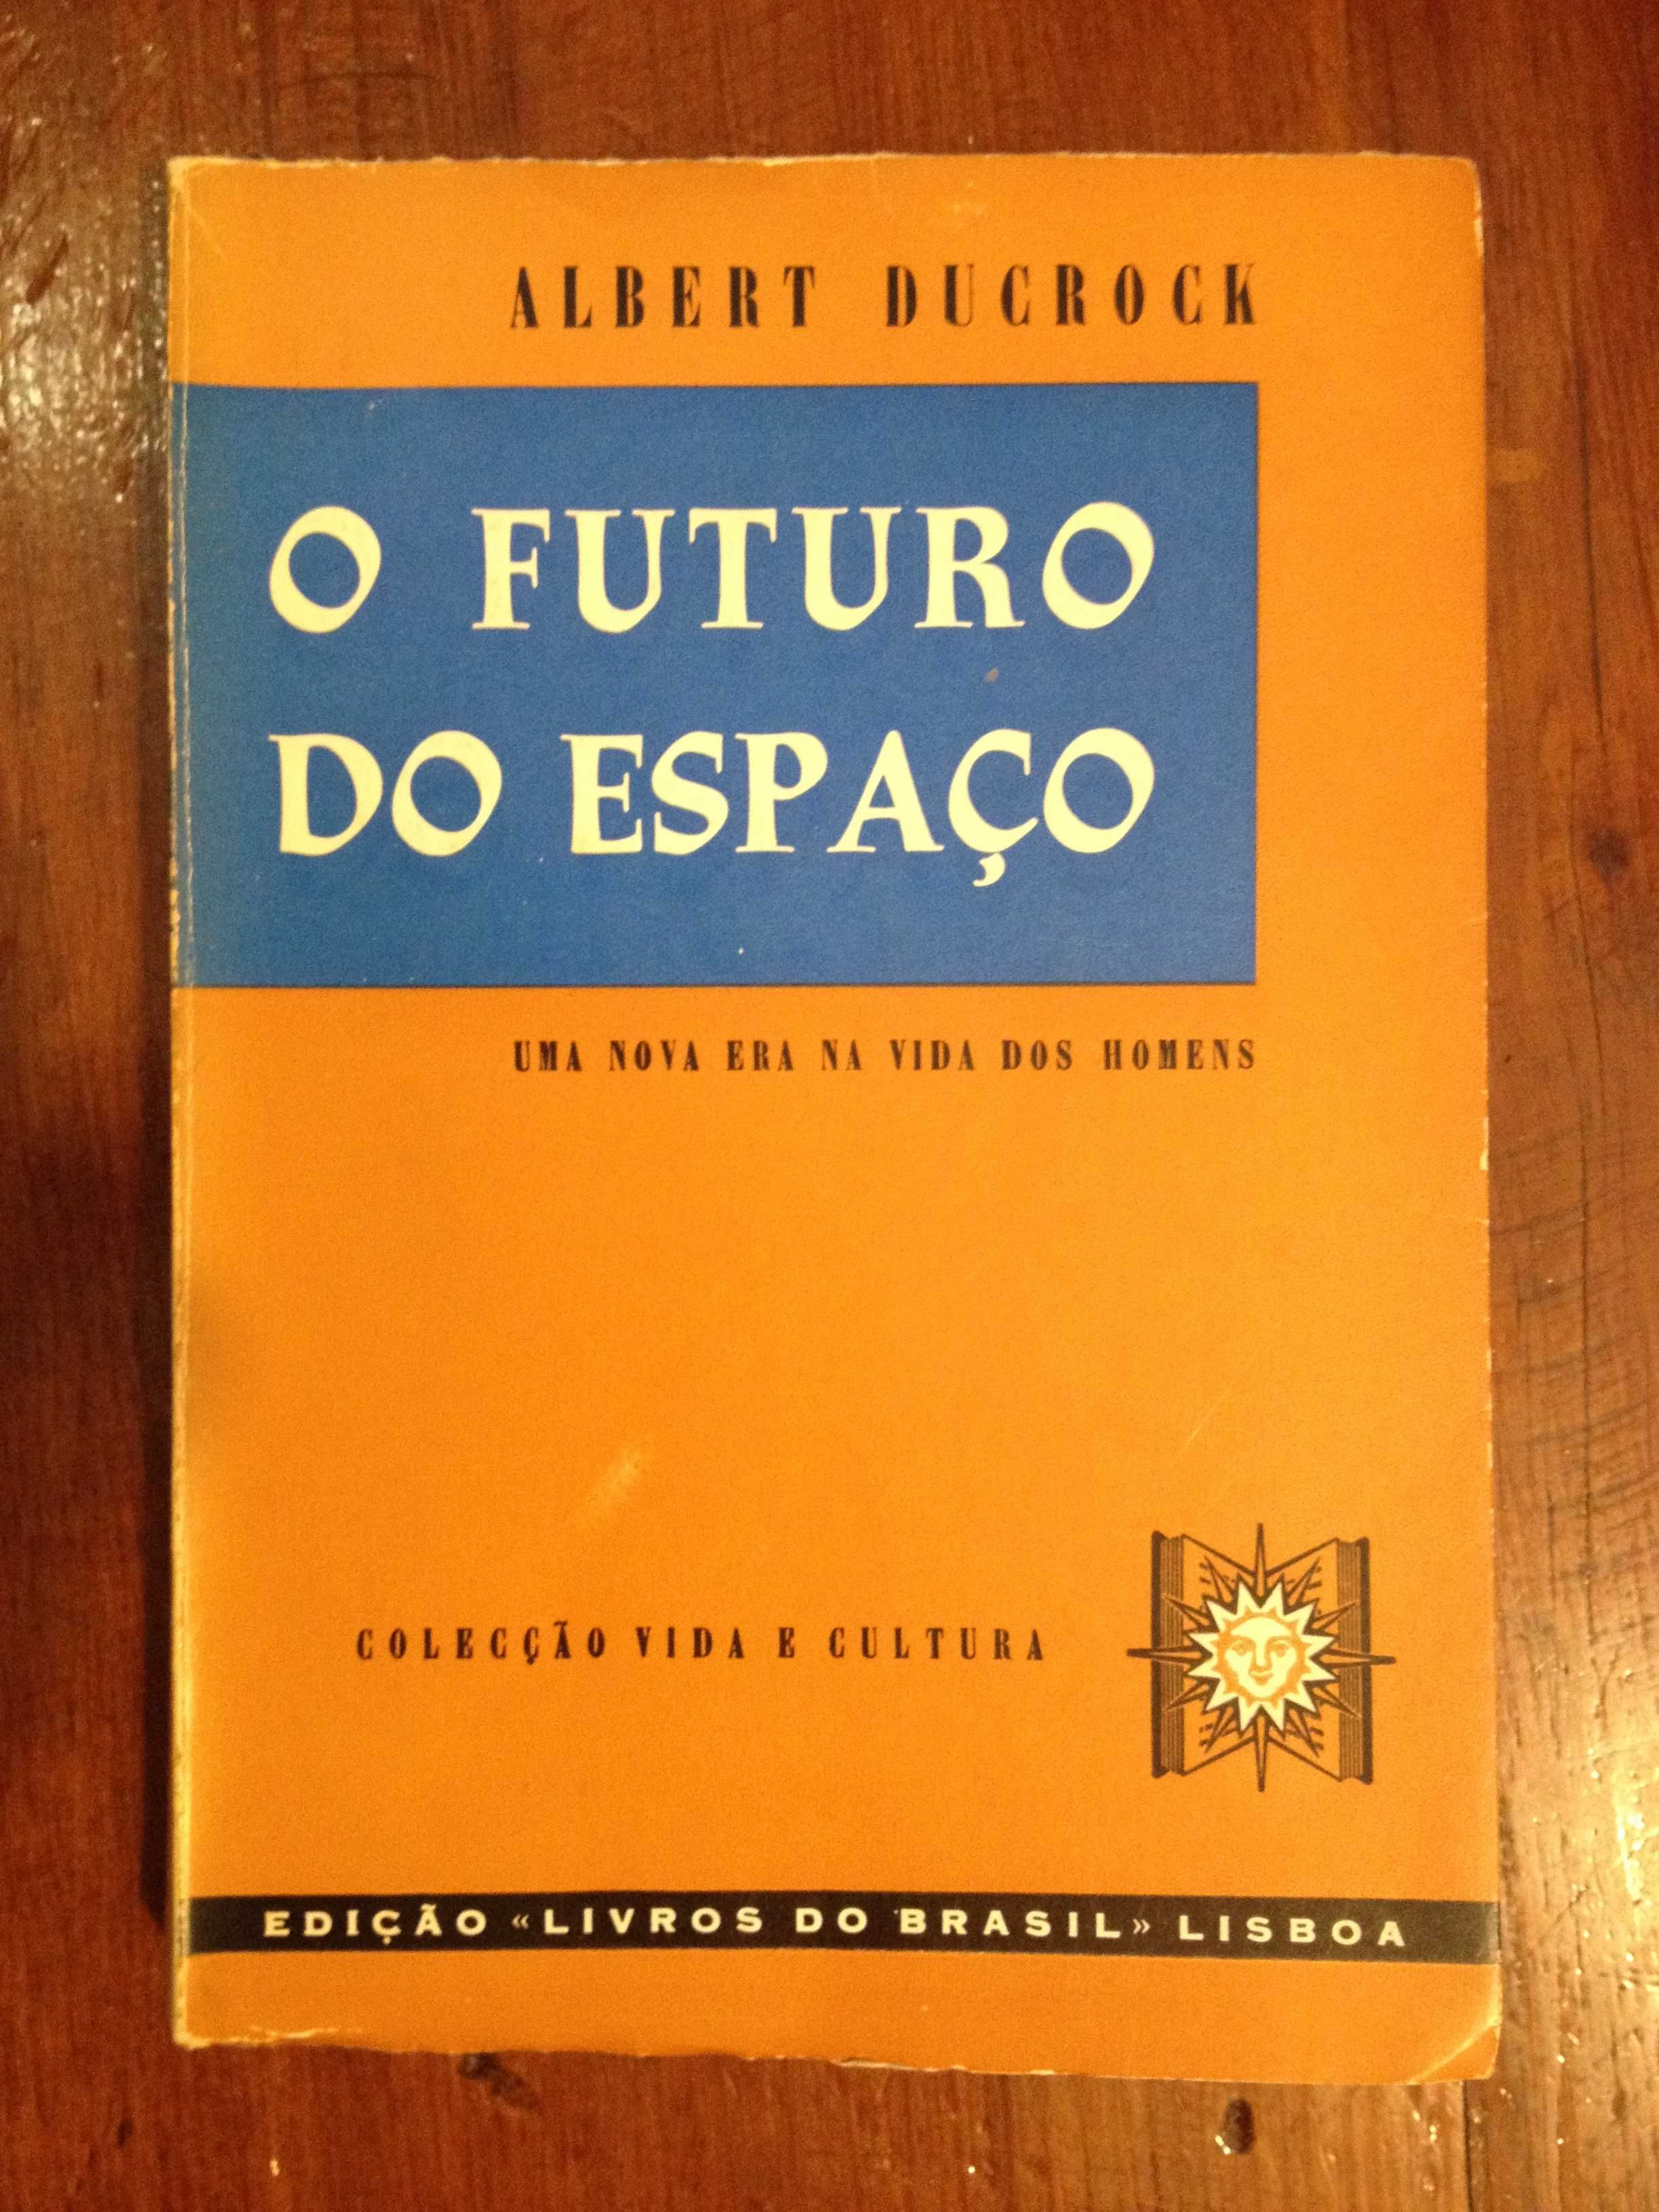 Albert Ducrock - O futuro do espaço